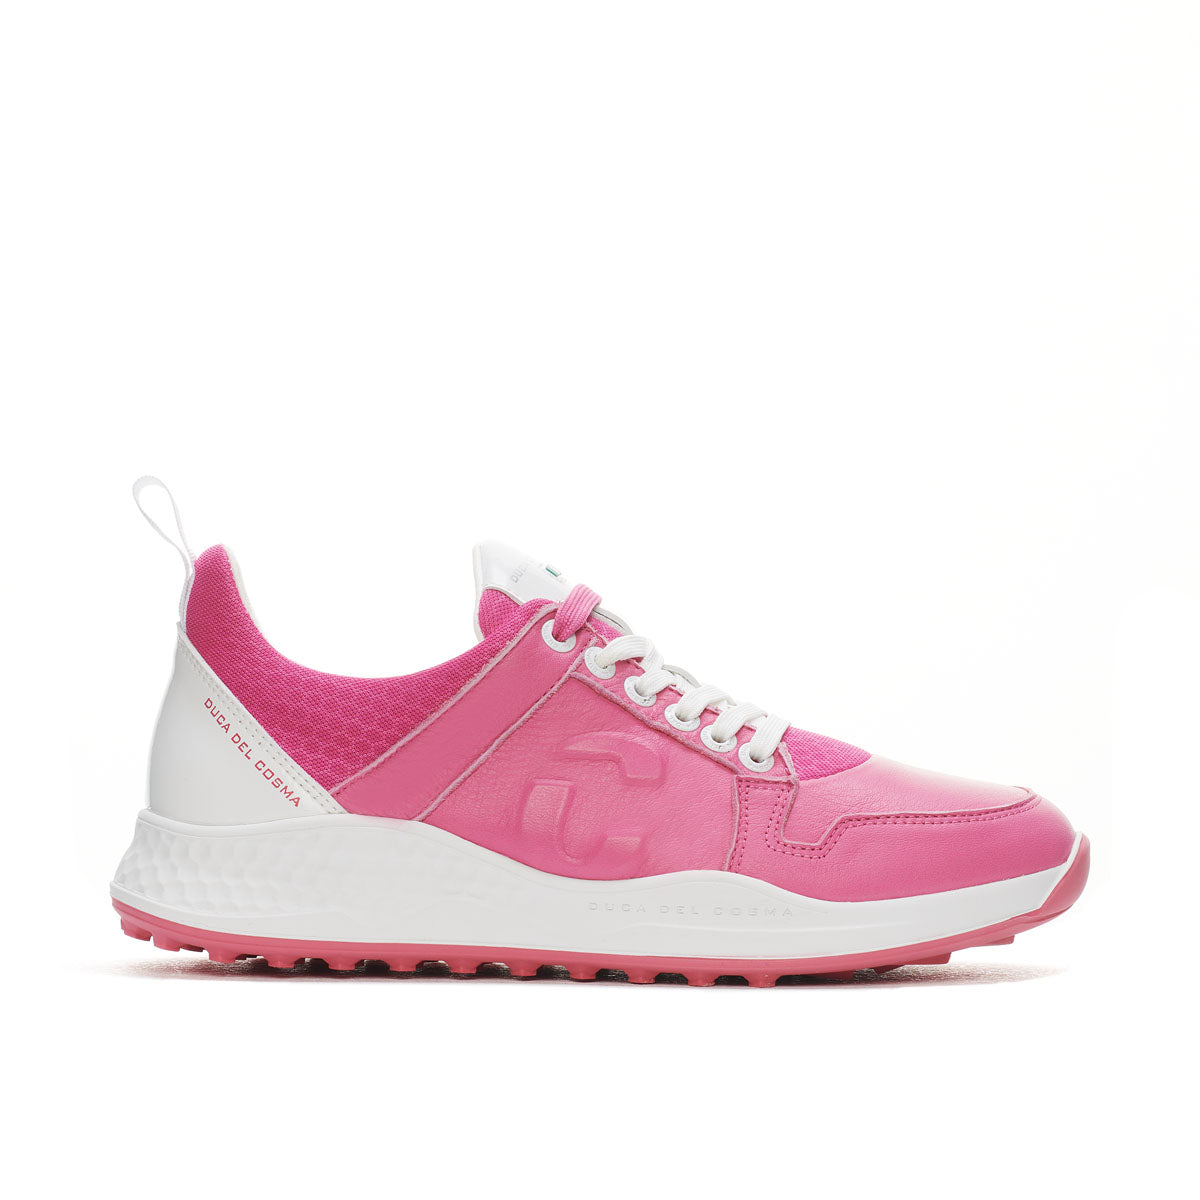 Women's Siren Pink Golf Shoe | Duca del Cosma